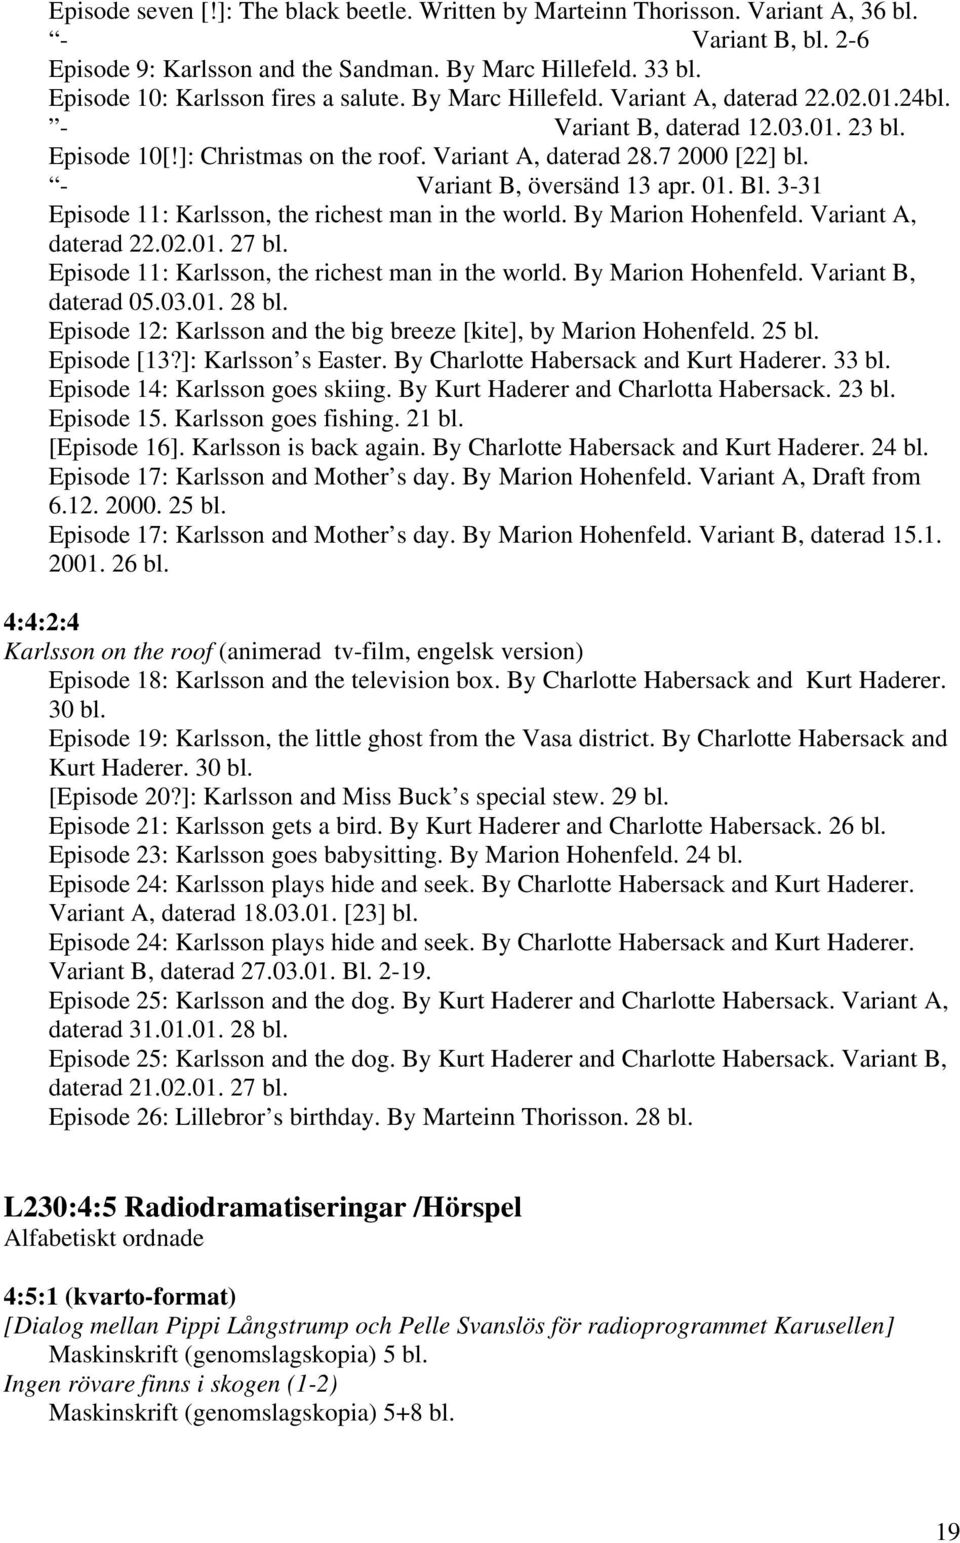 7 2000 [22] bl. - Variant B, översänd 13 apr. 01. Bl. 3-31 Episode 11: Karlsson, the richest man in the world. By Marion Hohenfeld. Variant A, daterad 22.02.01. 27 bl.